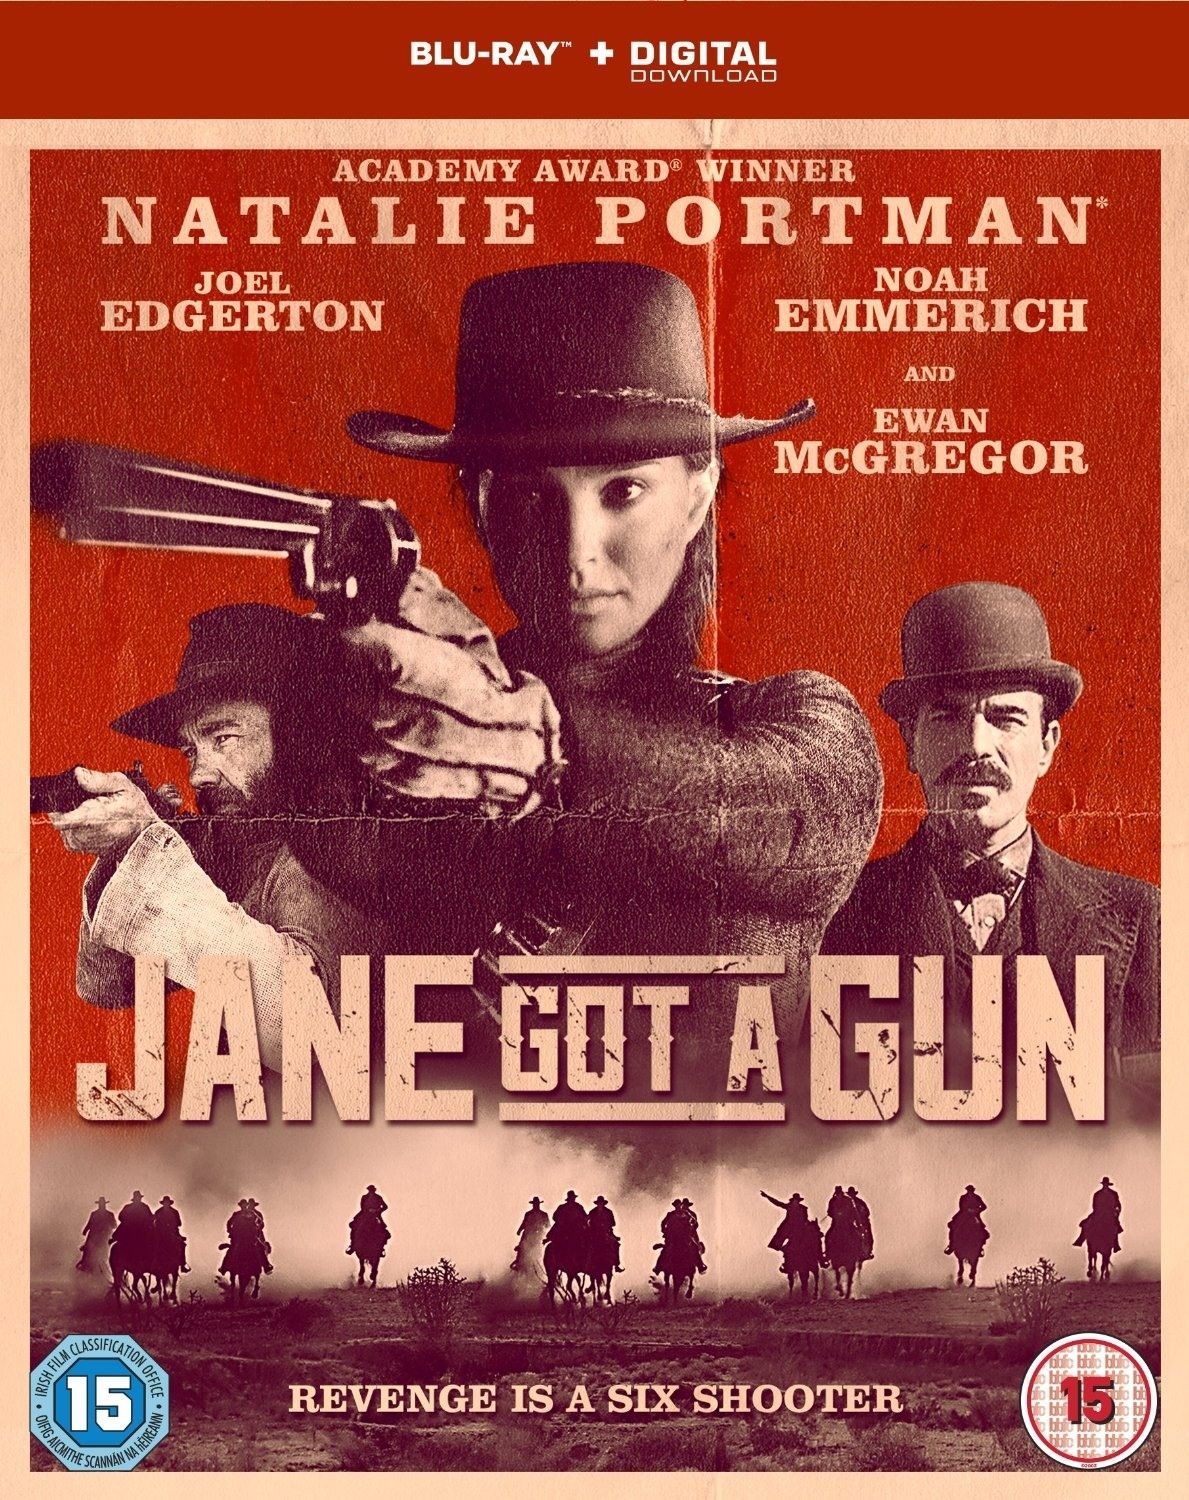 Джейн берет ружье